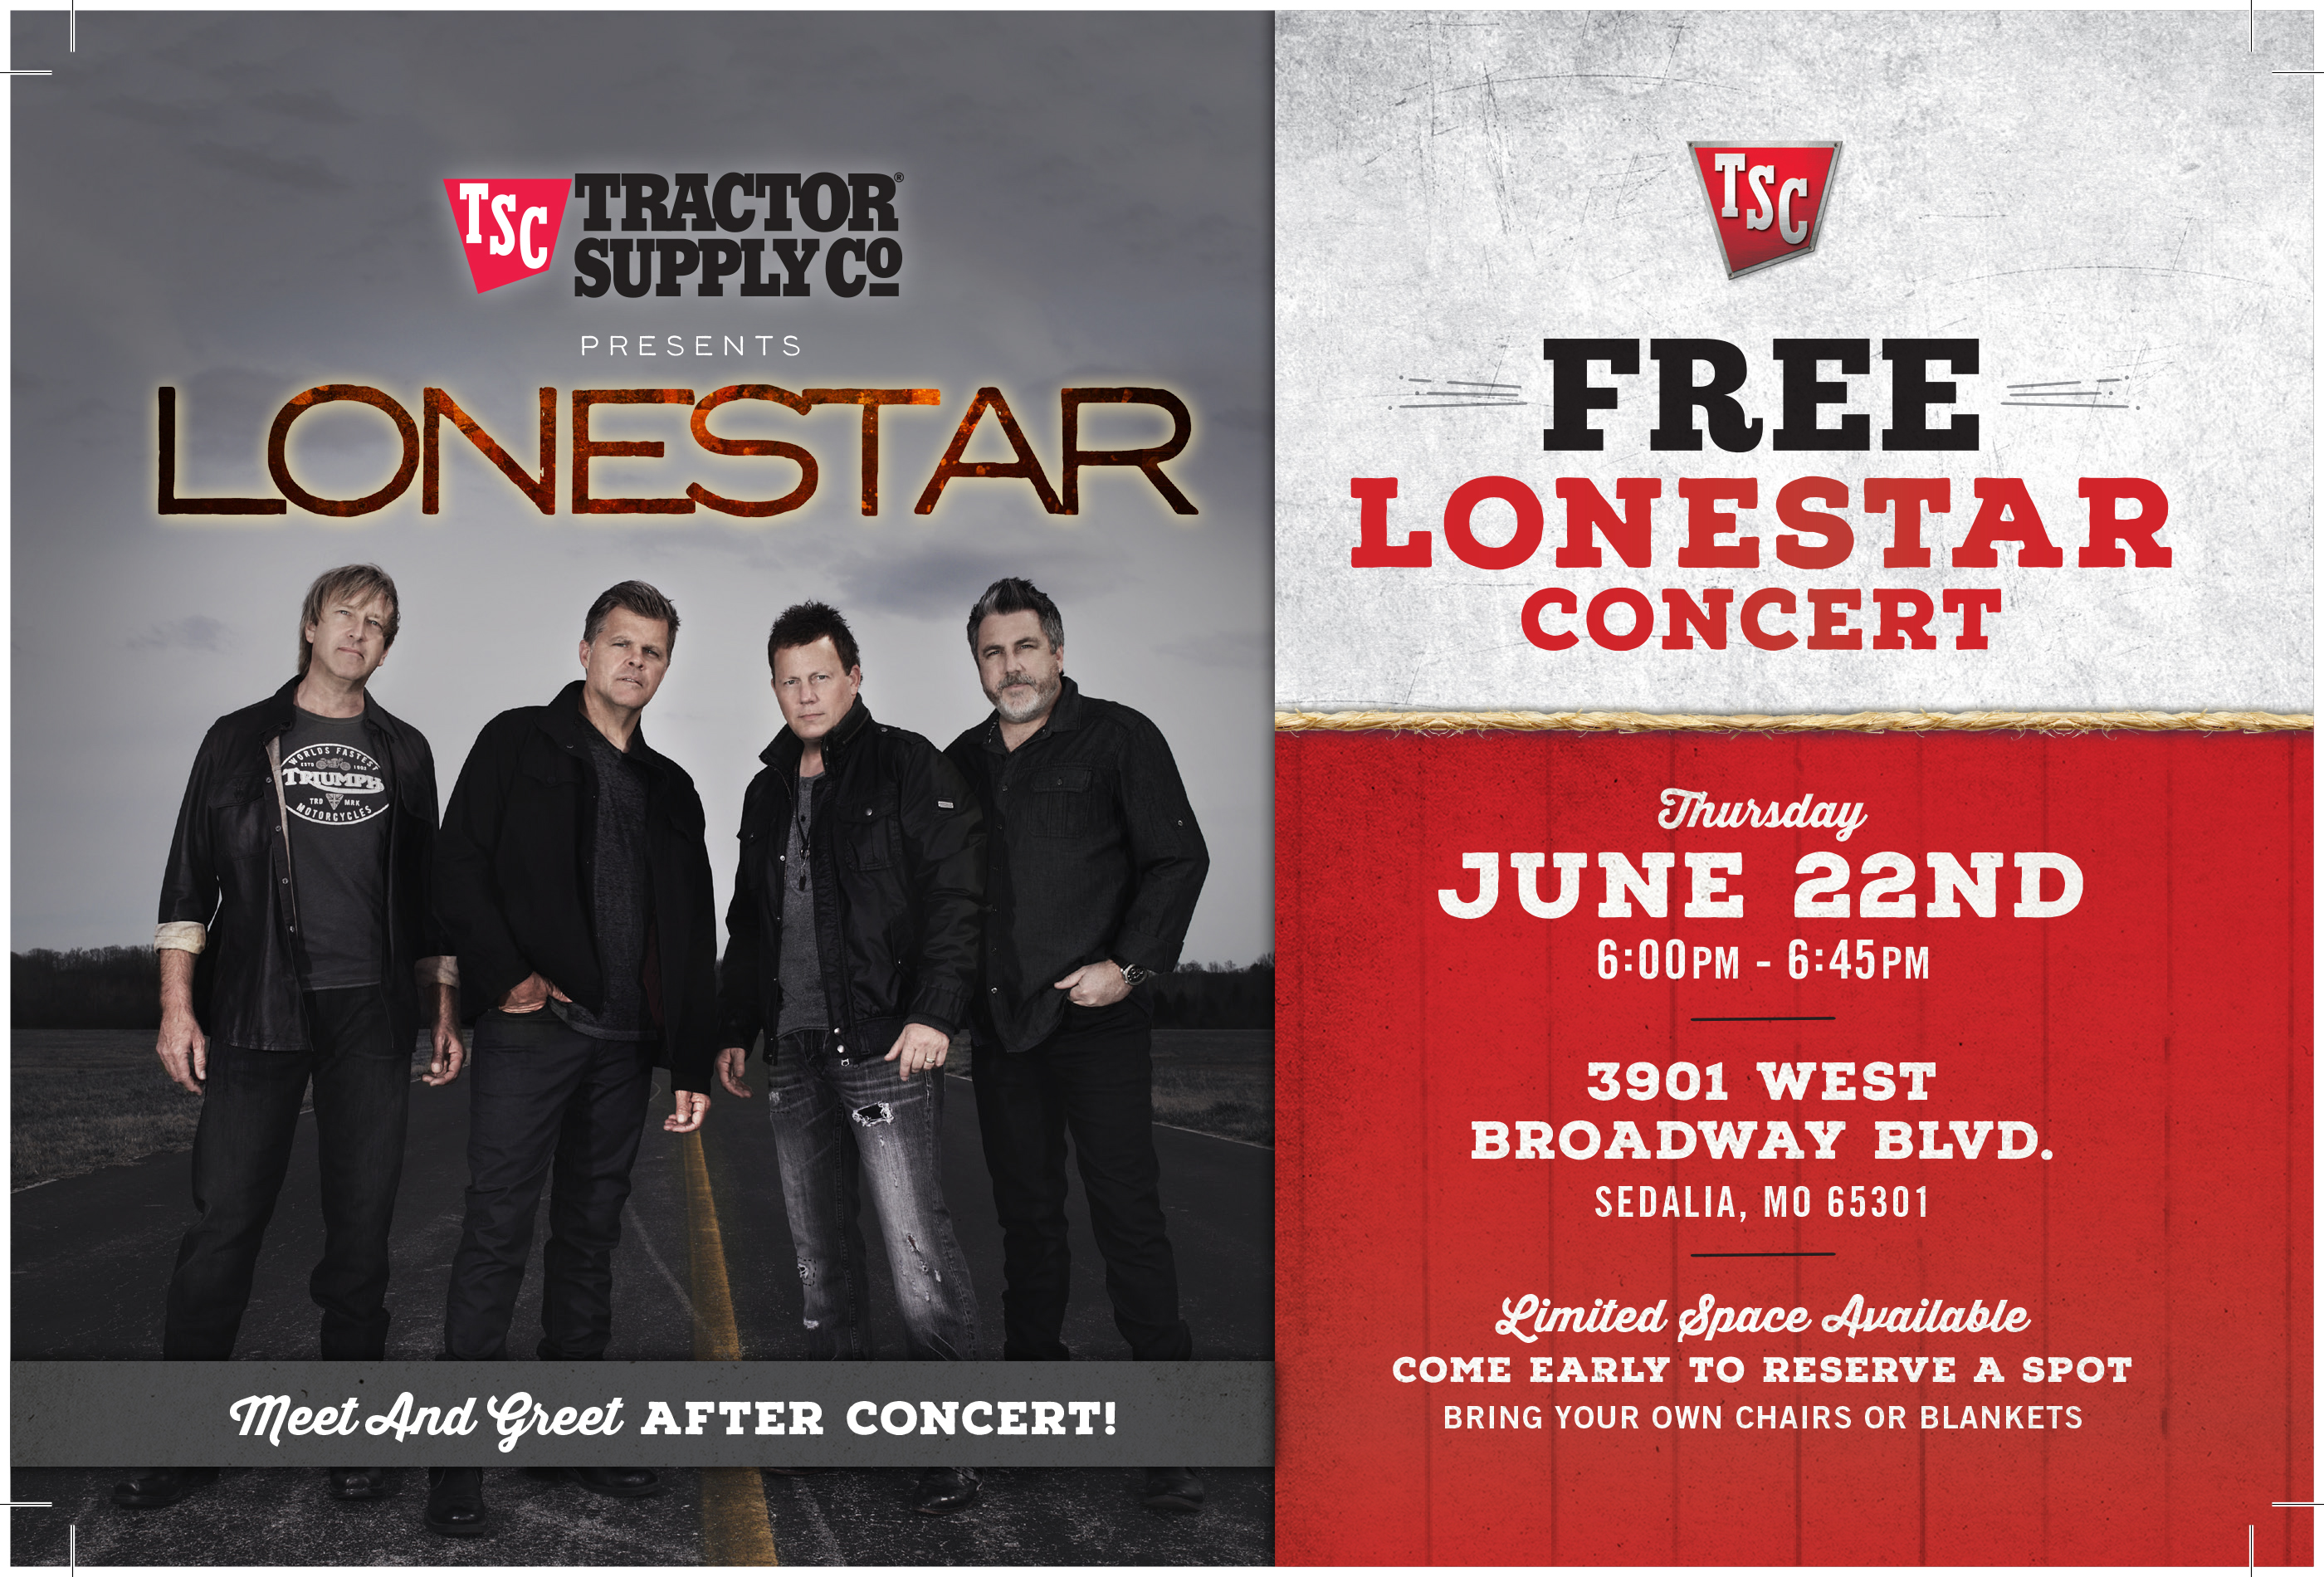 Lonestar to perform at Sedalia Tractor Supply